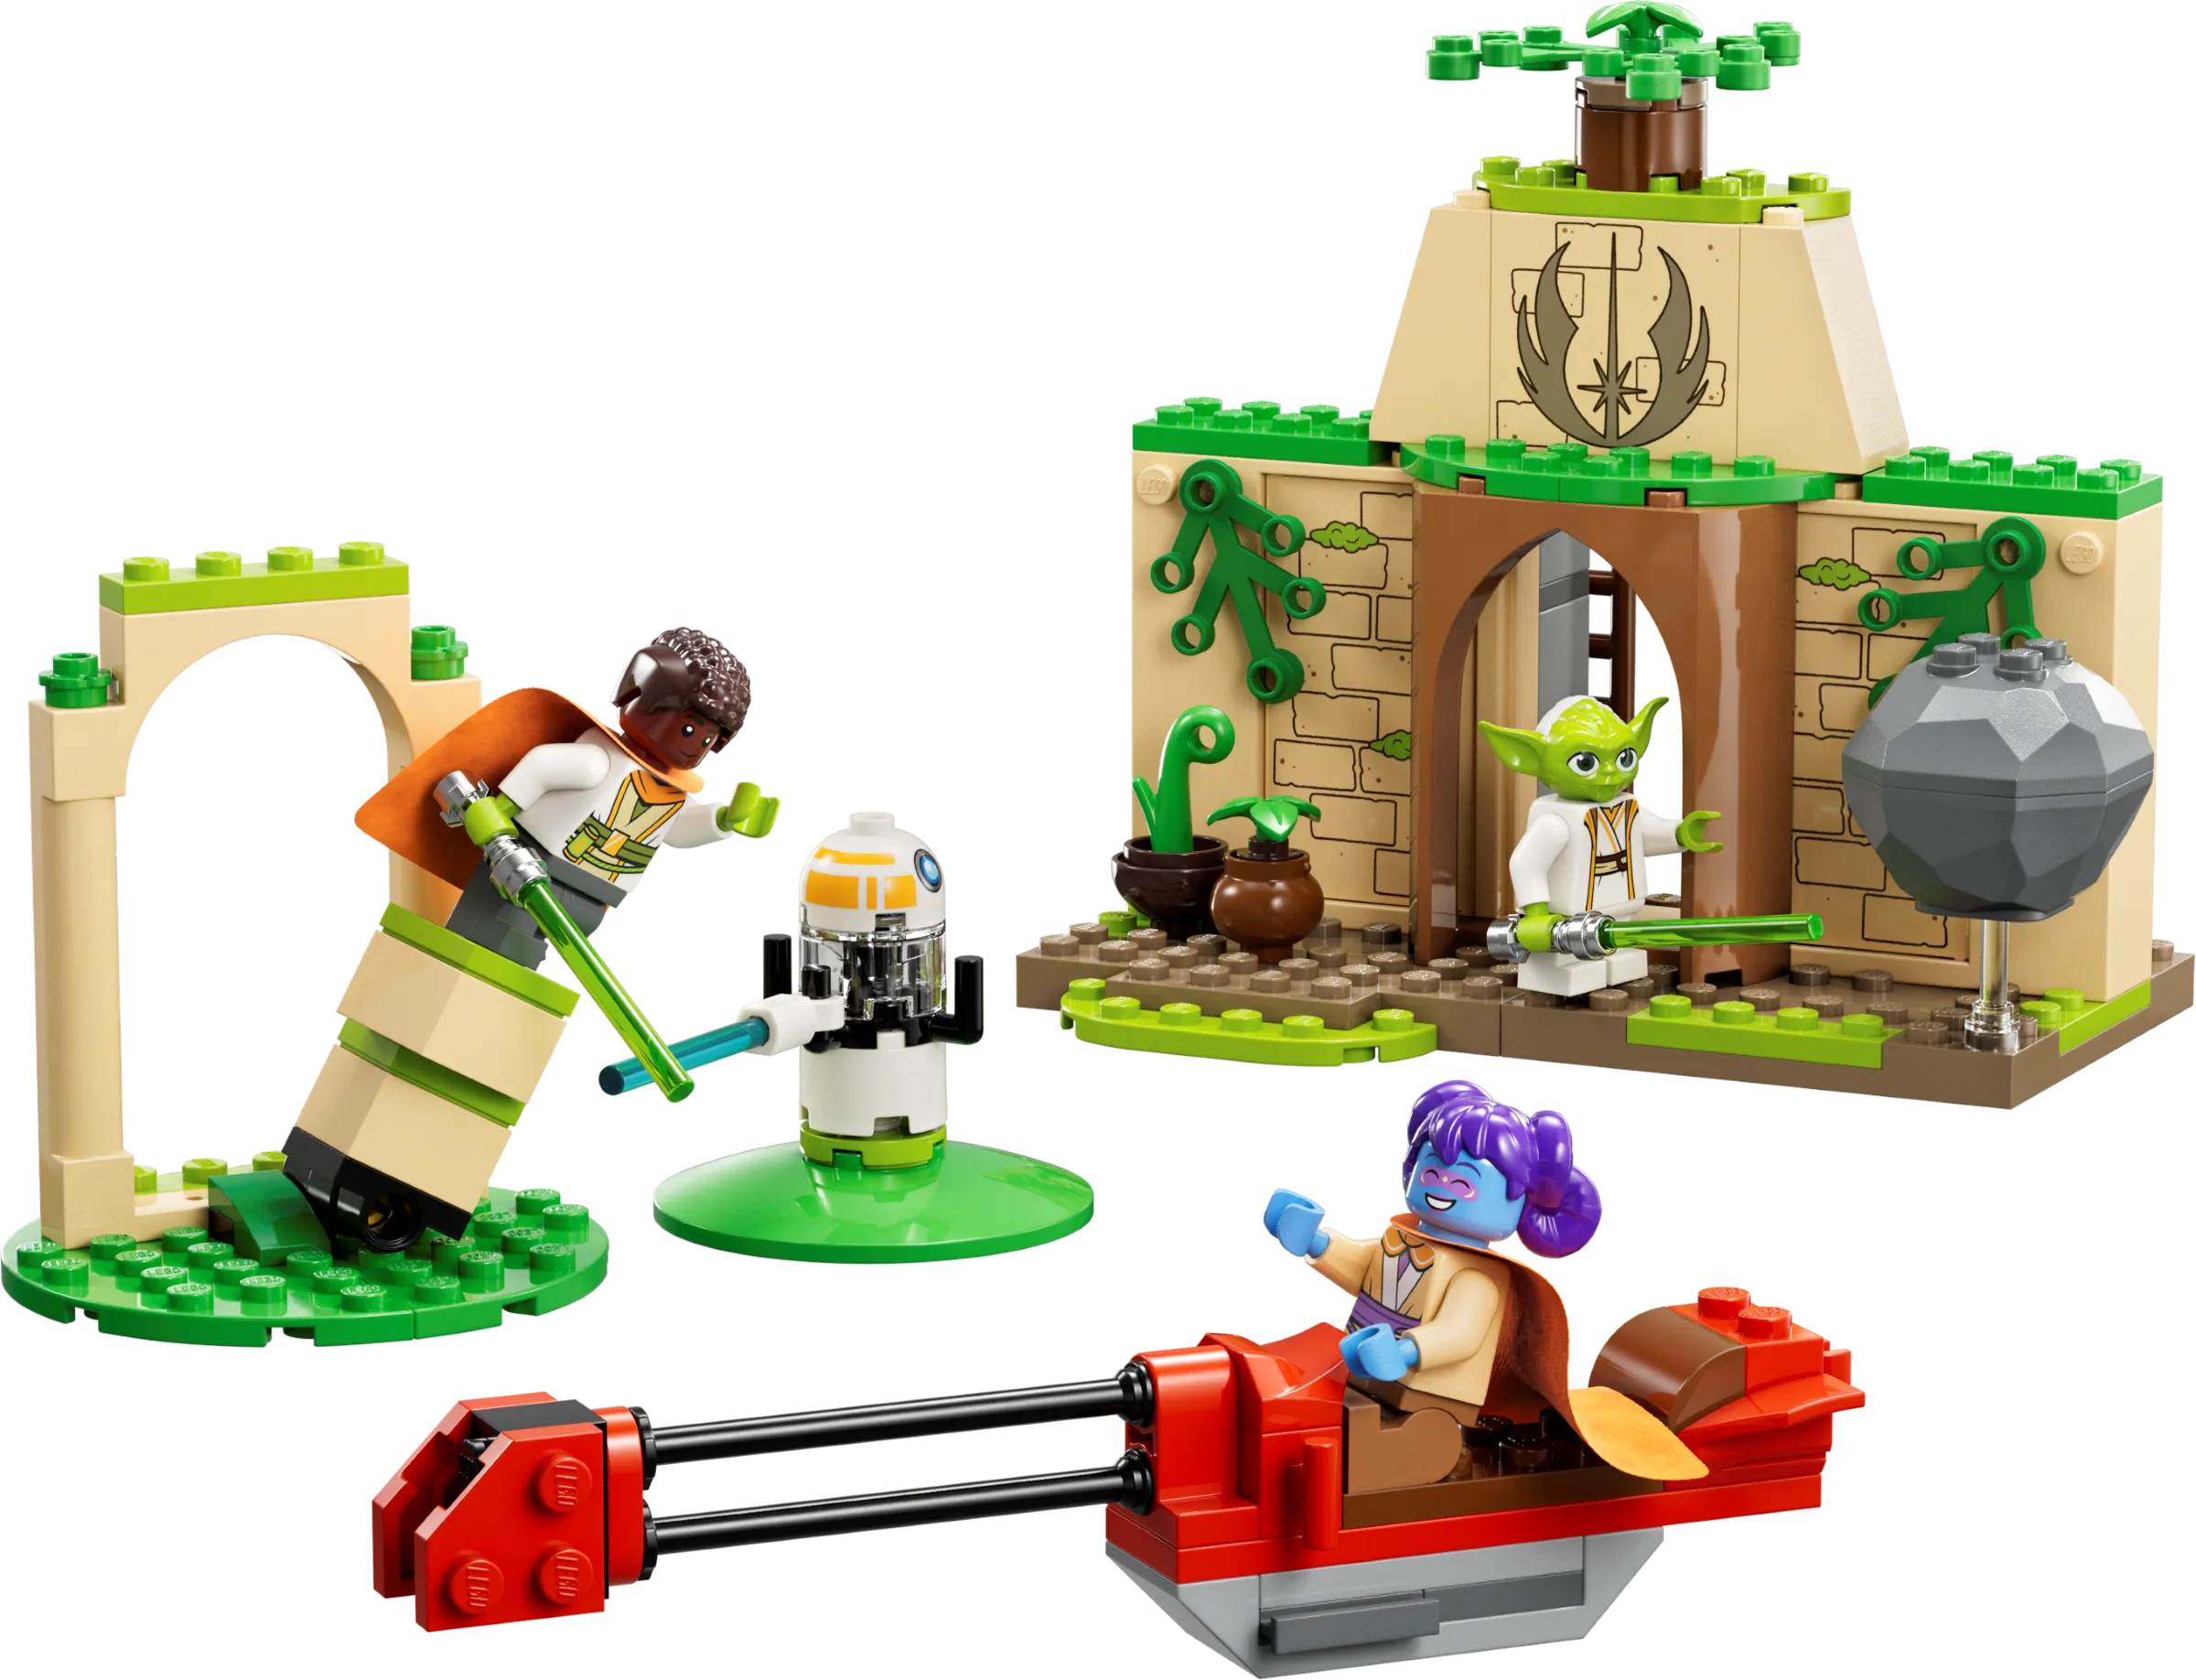 Lego Star Wars: Master Yoda Minifigure With Green Lightsaber